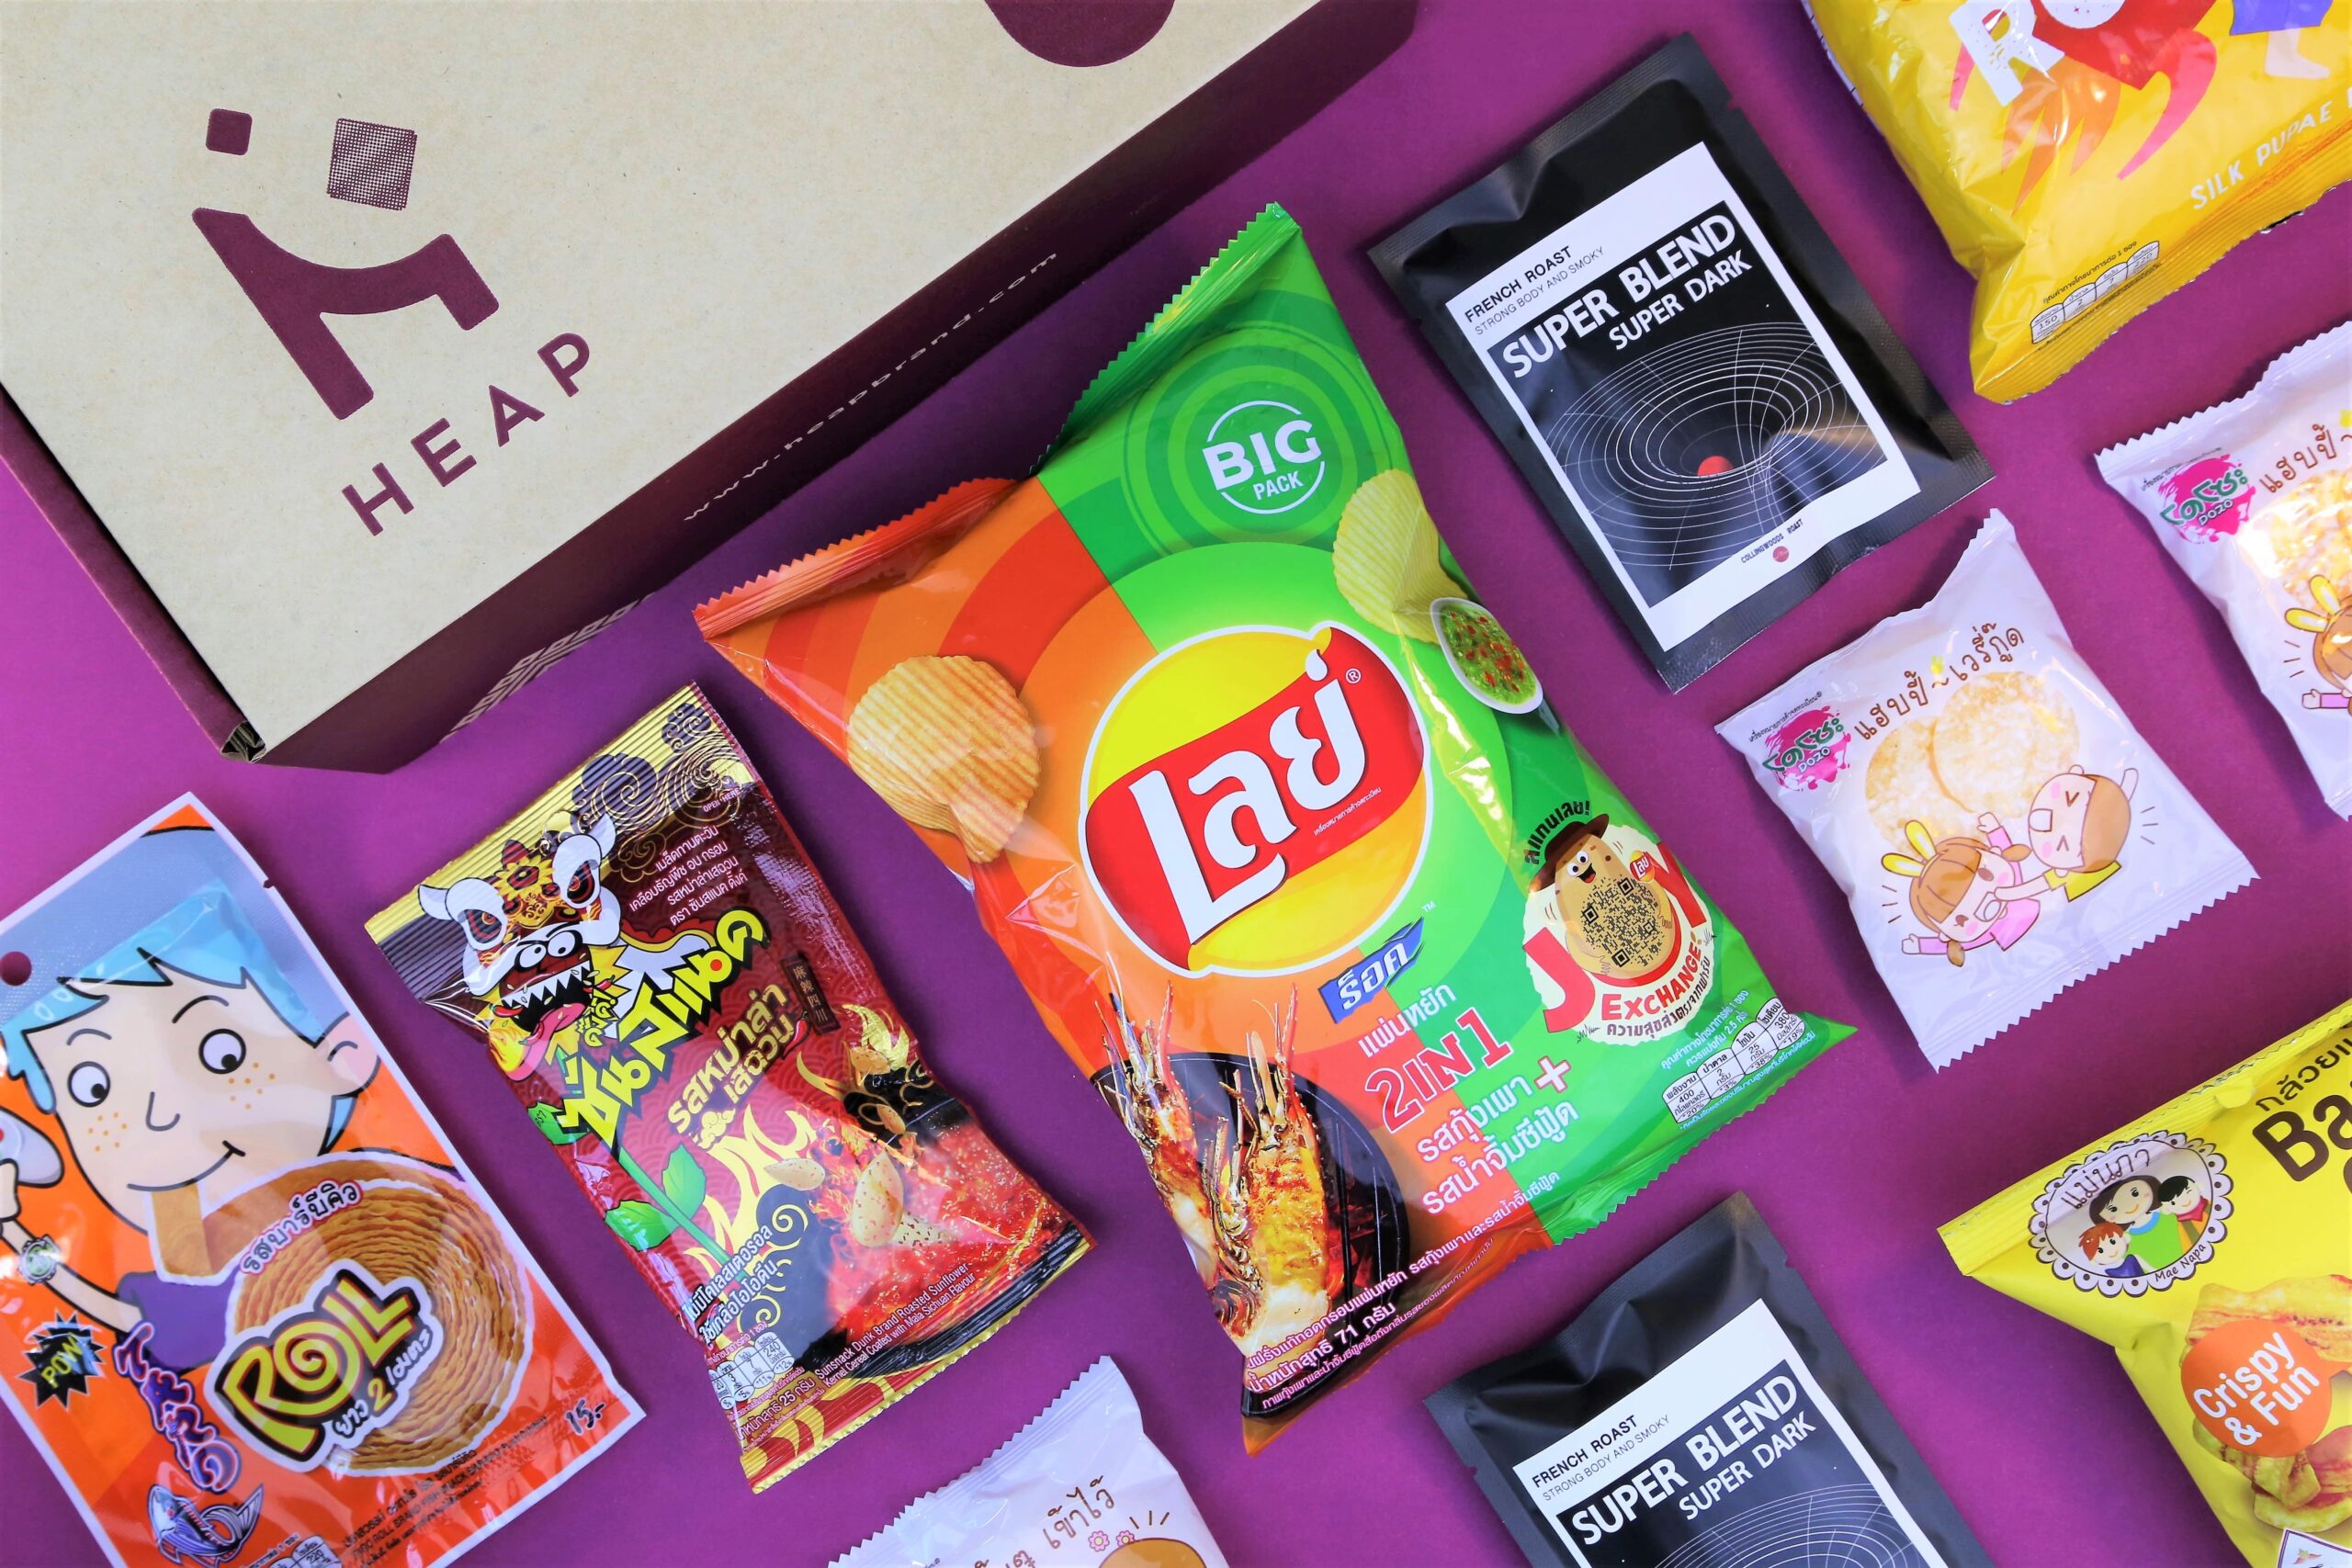 Halloween theme Thai snack box from Heap Brand curates local unique Thai snacks